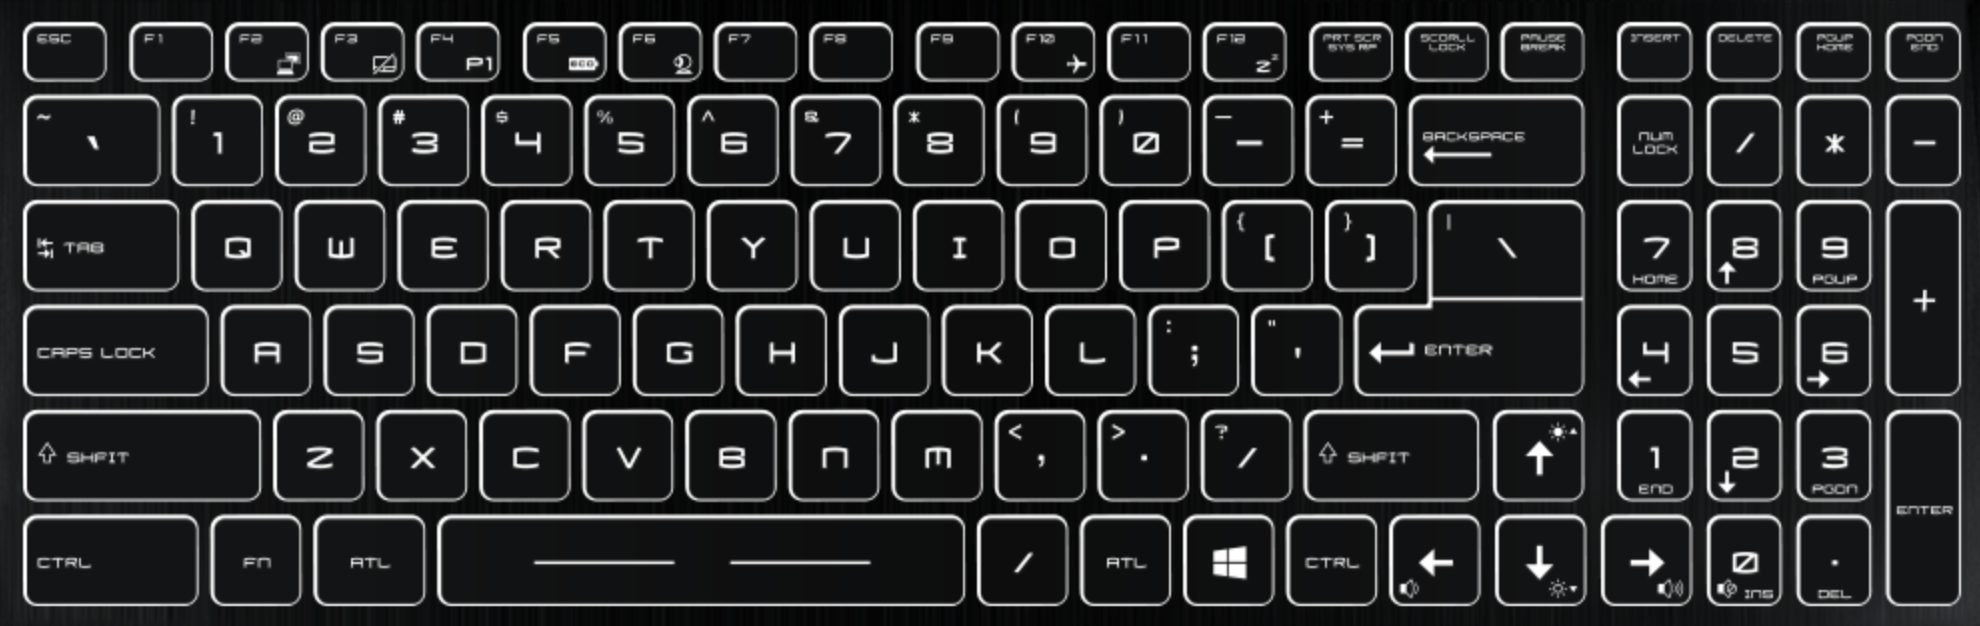 MSI GT72 Laptop Keyboard Key Replacement (Backlit)